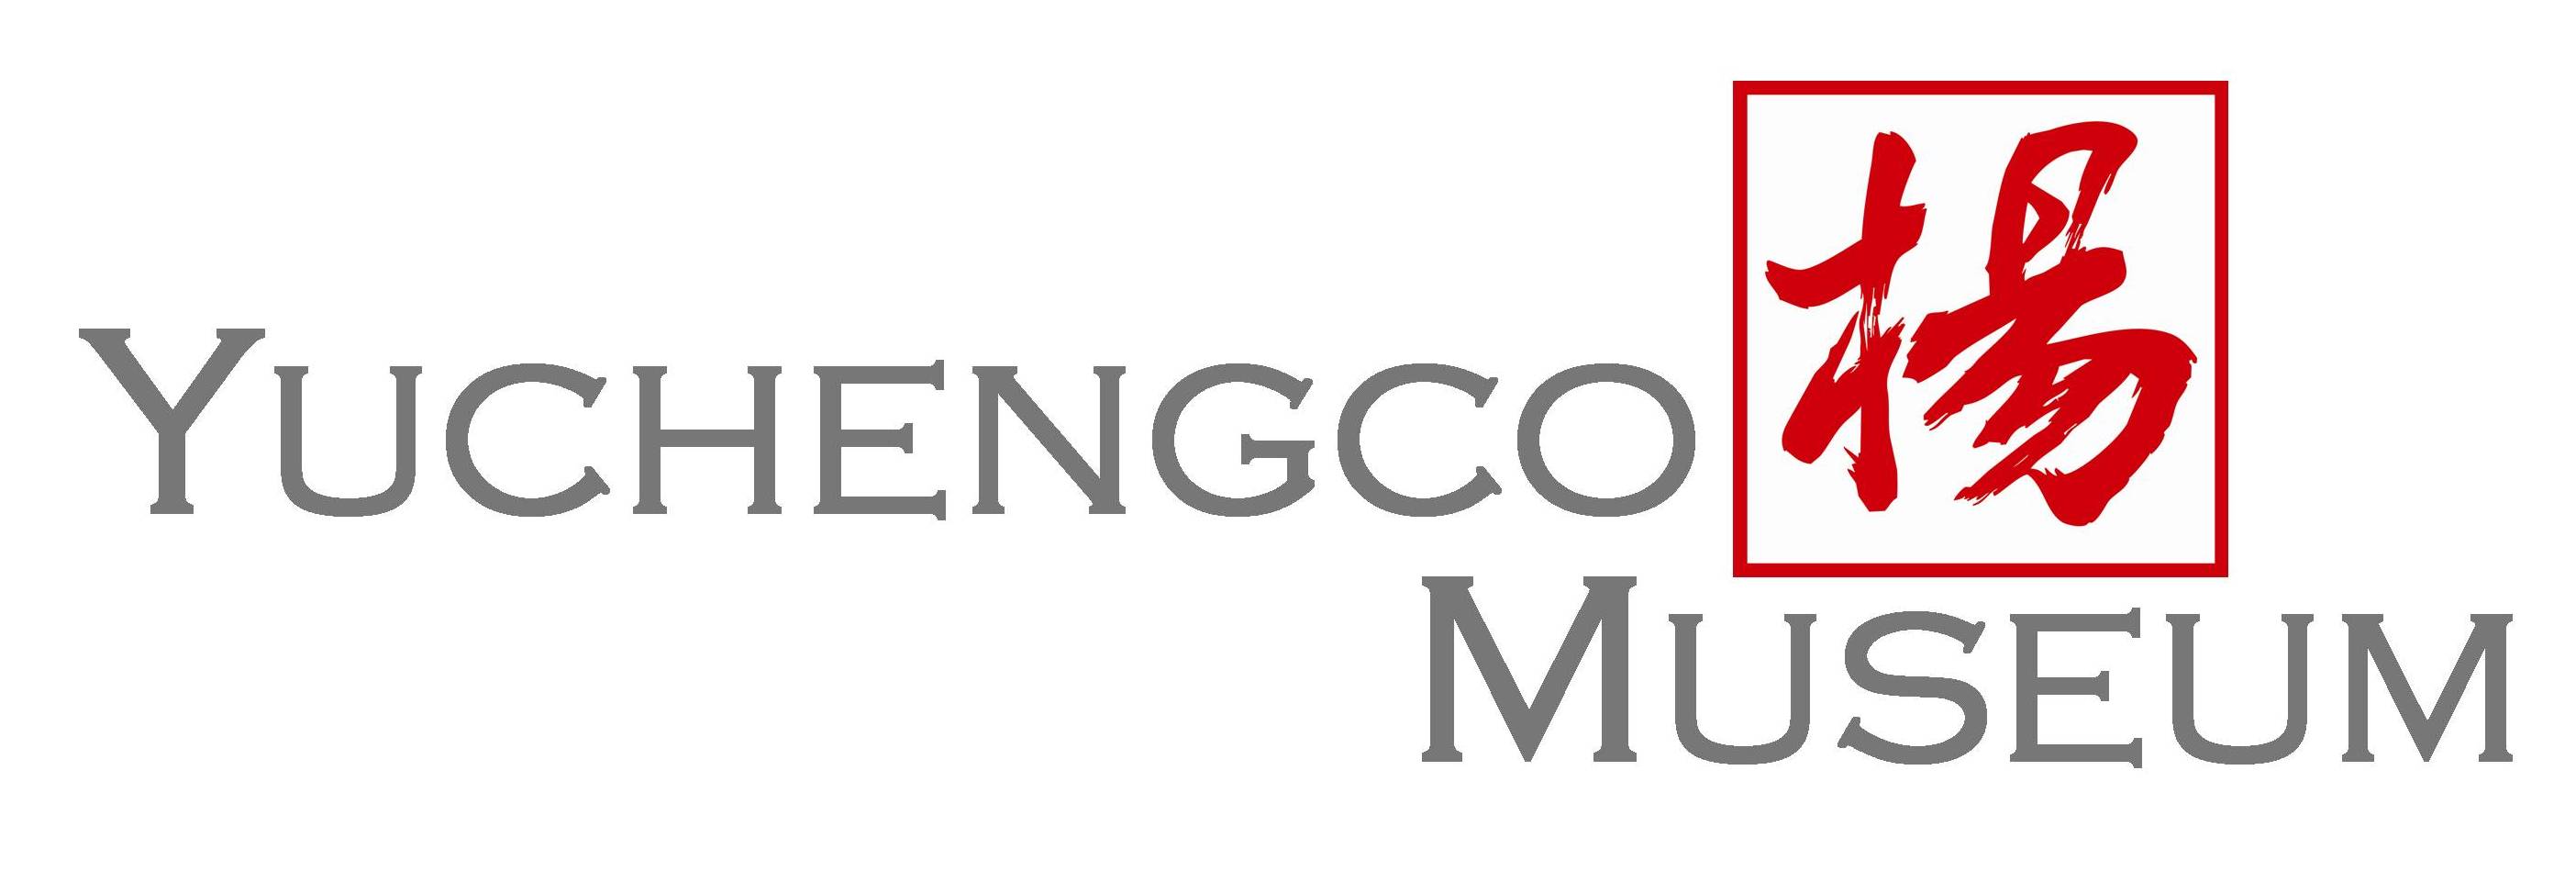 Museum Logos